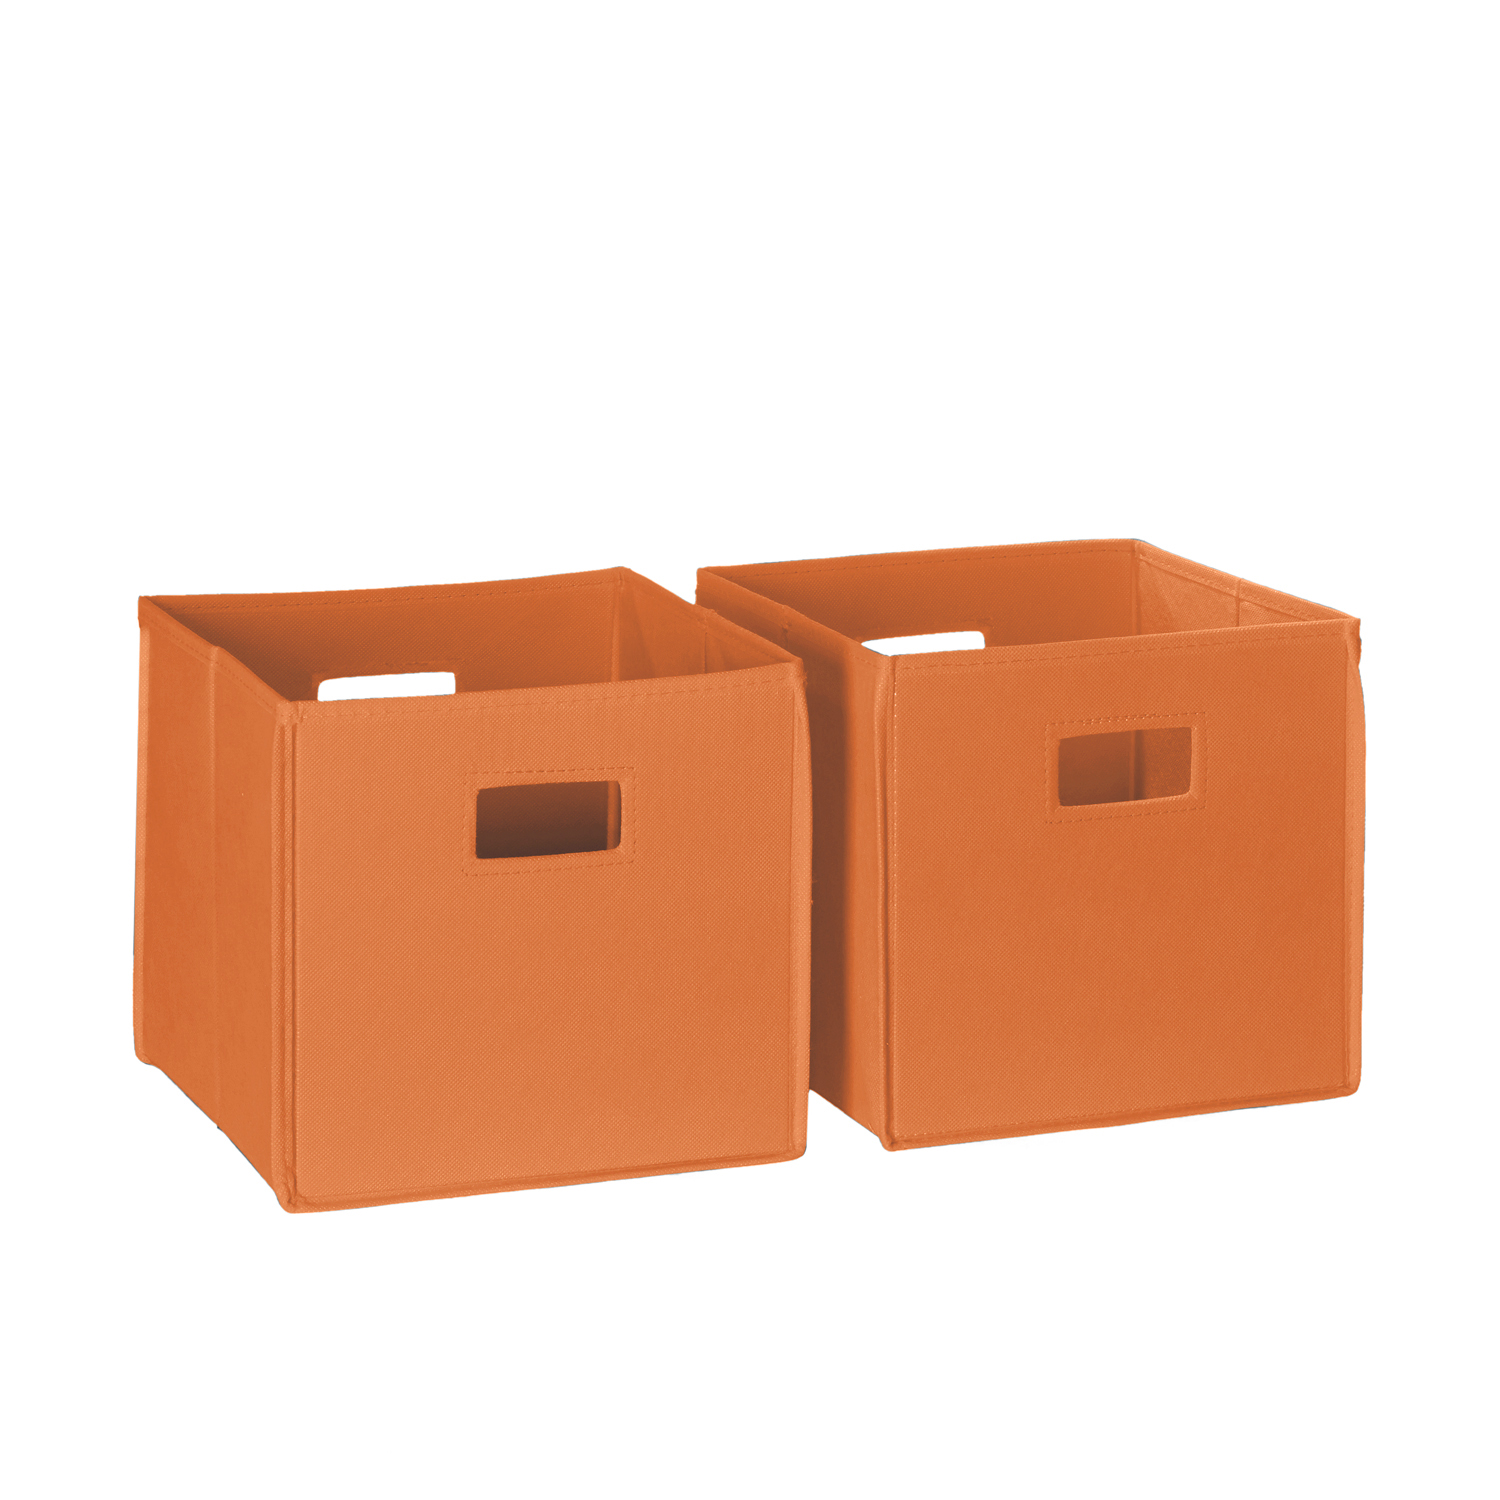 RiverRidge Home Folding Fabric Cube Storage Bin Set of 2 - Orange - image 1 of 8